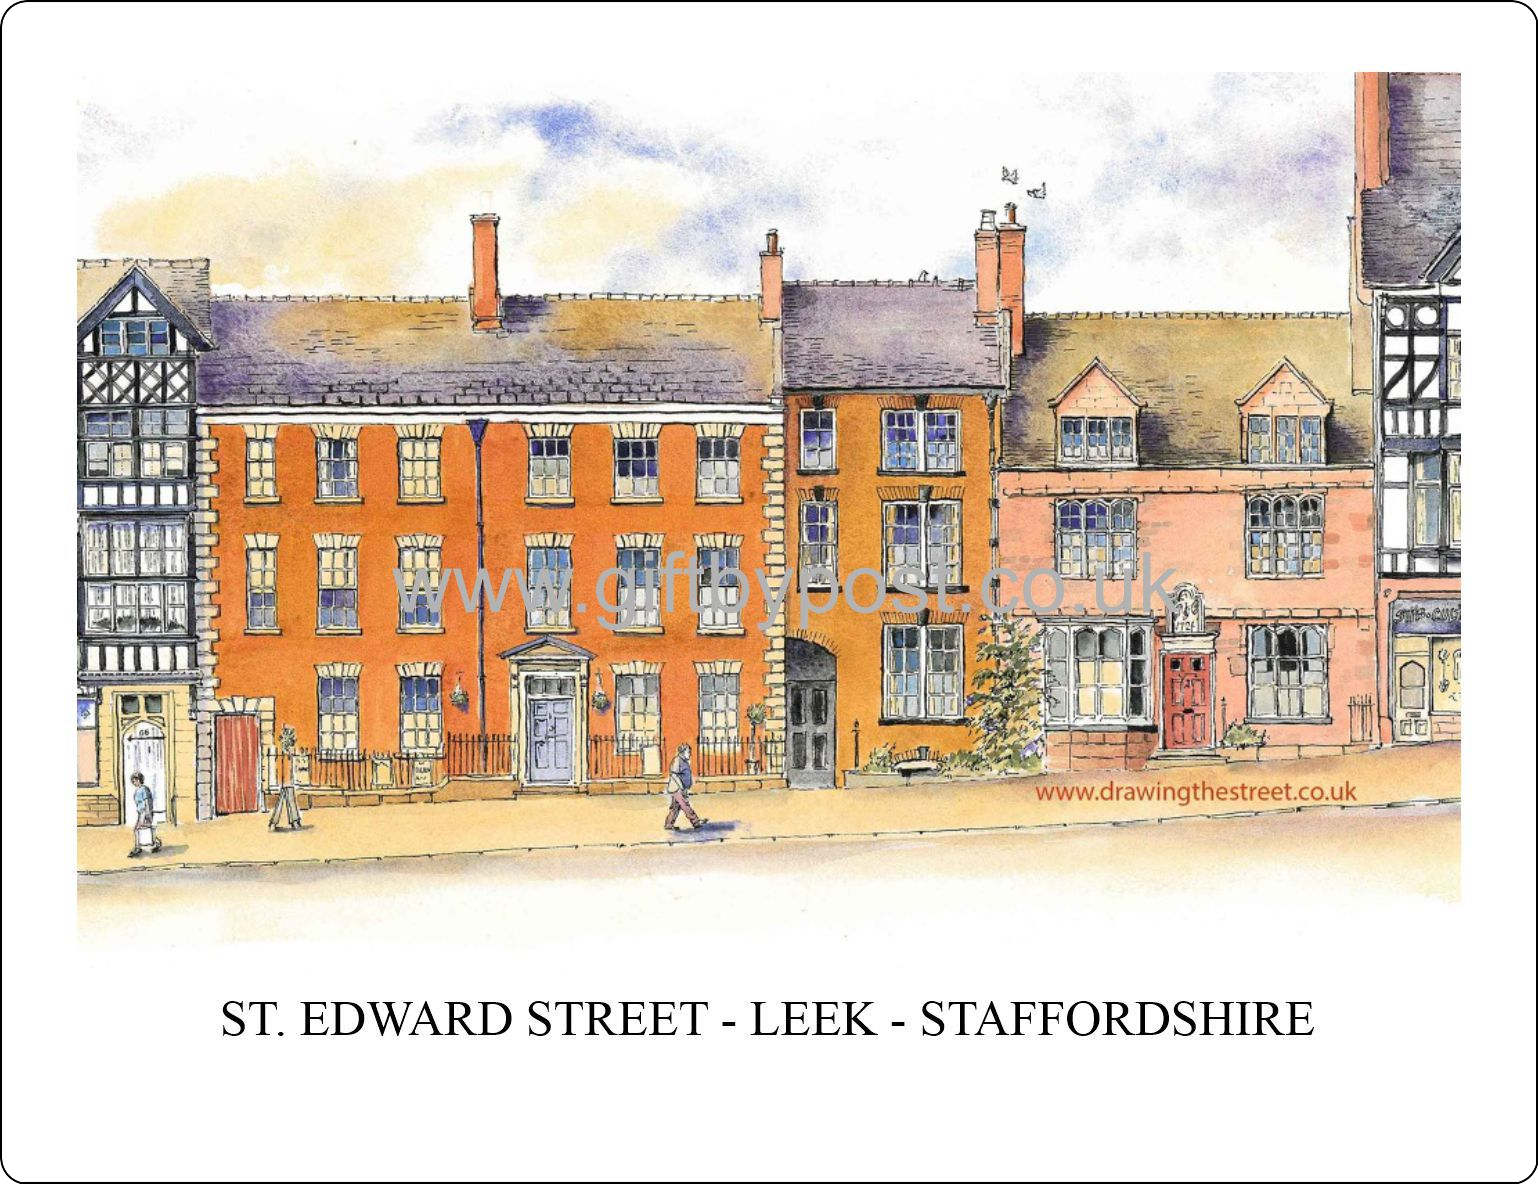 Placemat - Leek Staffordshire - St. Edward Street (2)